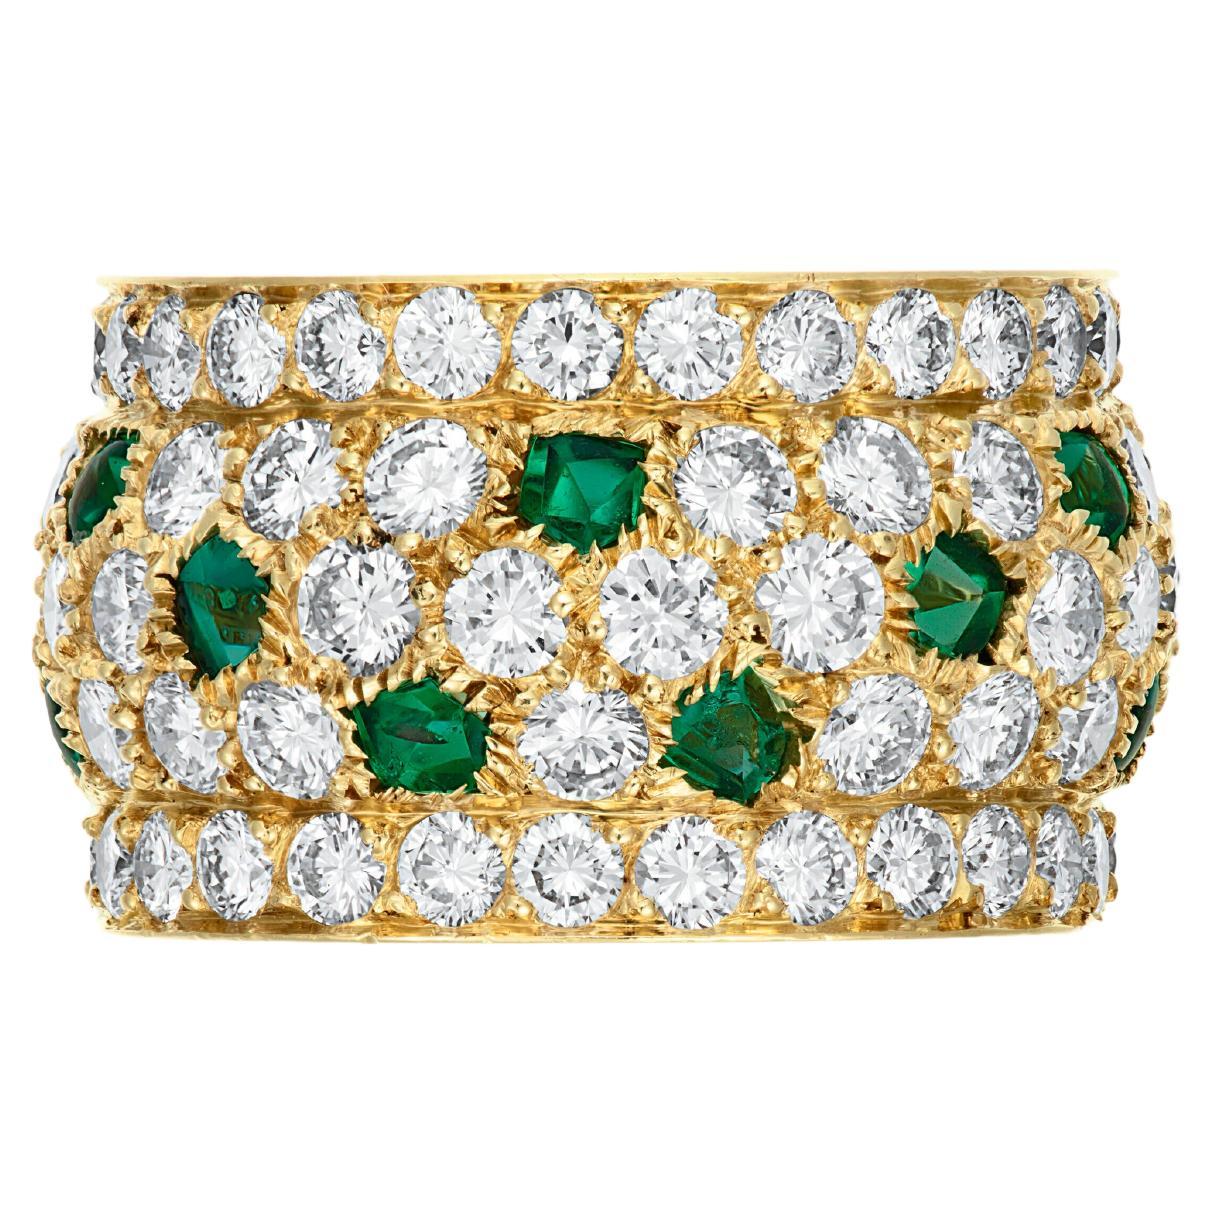 Cartier Emerald and Diamond 'Nigeria' Band Ring